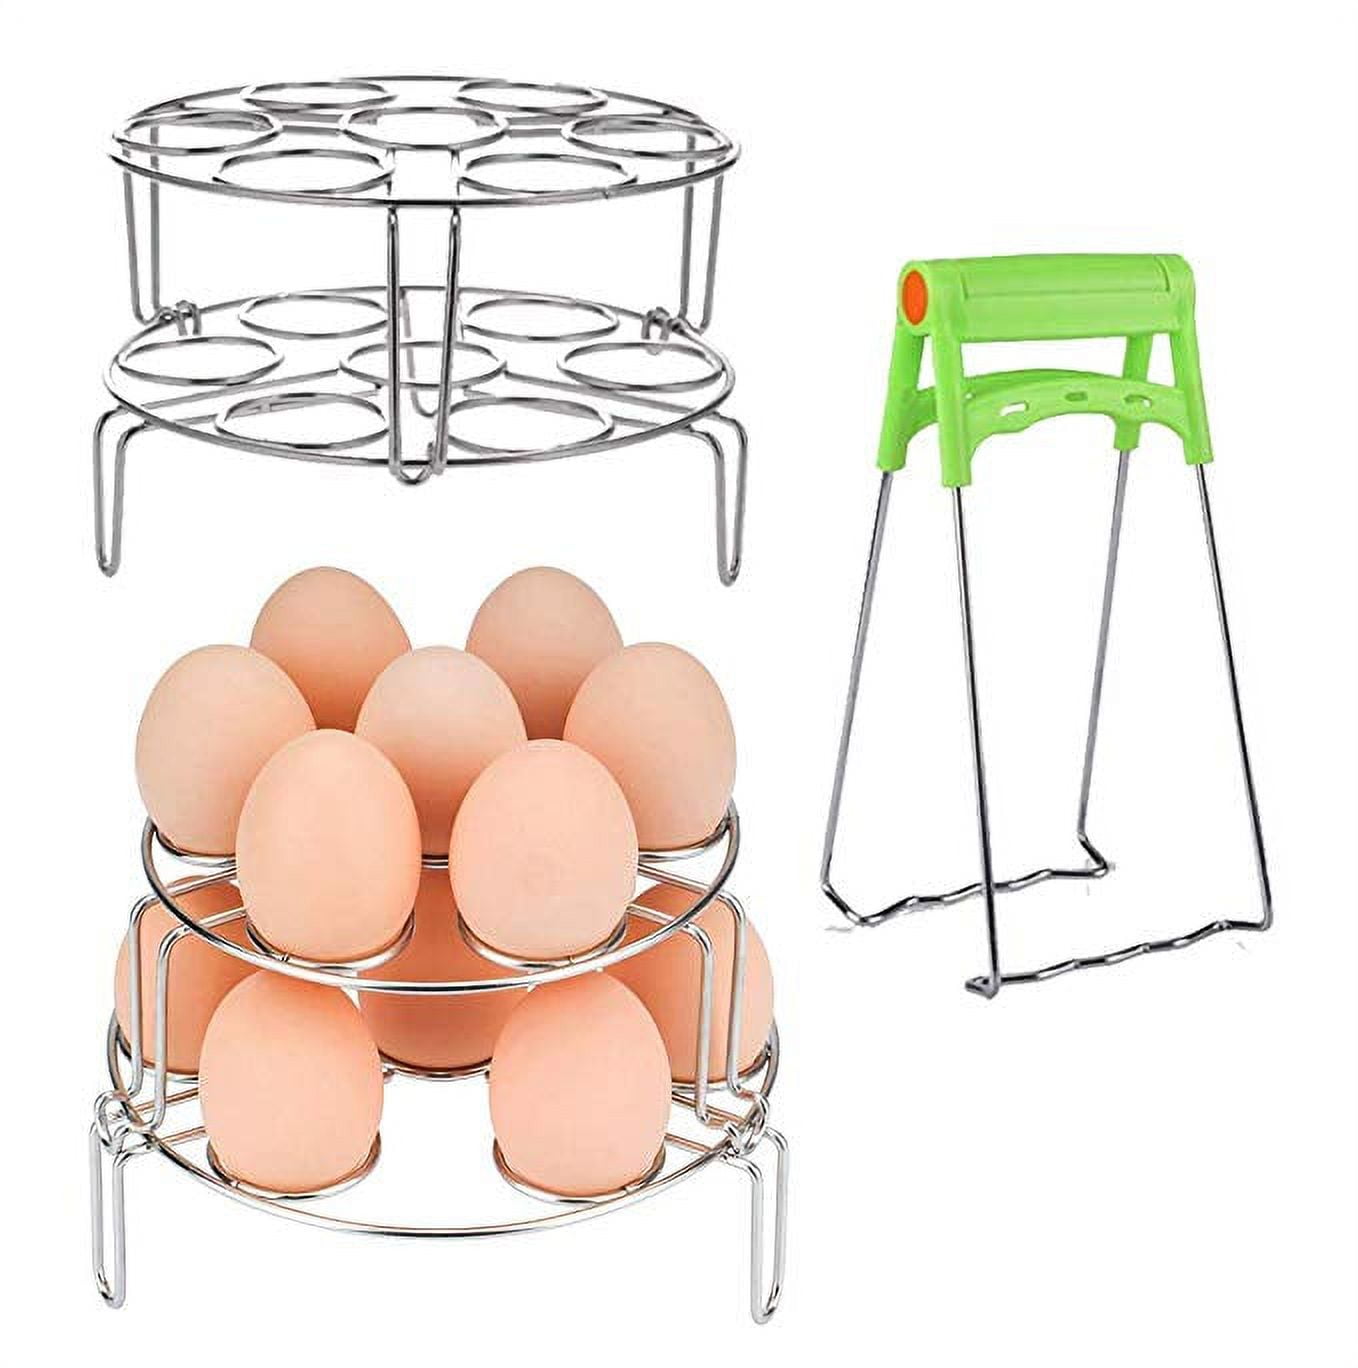  Egg Steamer Rack, Alamic Egg Rack Steamer Trivet Basket Stand  for Instant Pot 3 Quart Accessories and Pressure Cooker 3 Qt Accessories,  Stainless Steel - 1 Pack: Home & Kitchen